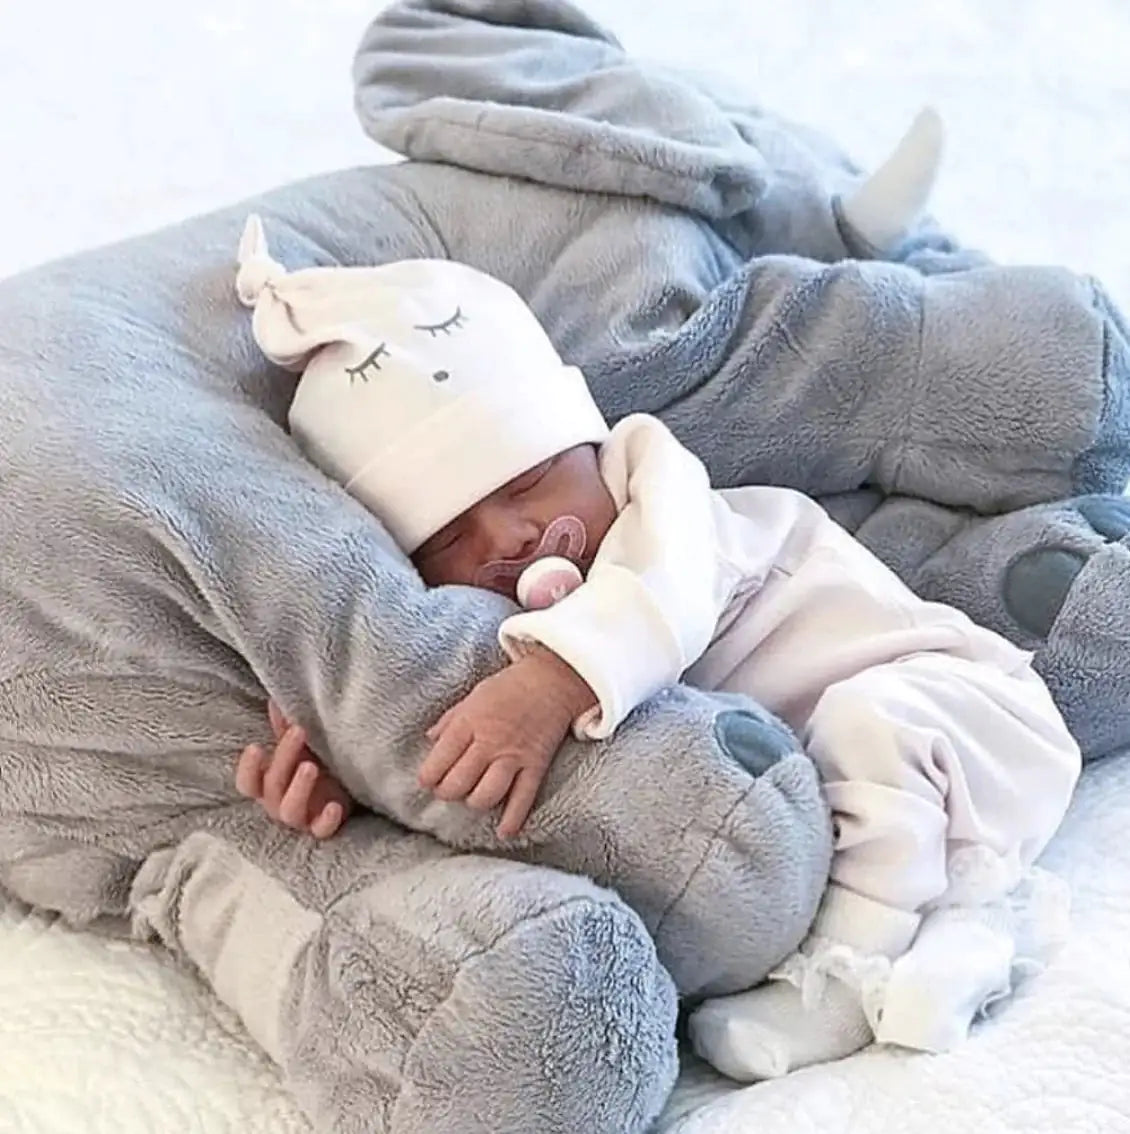 Plush Baby Elephant Cuddle Pillow